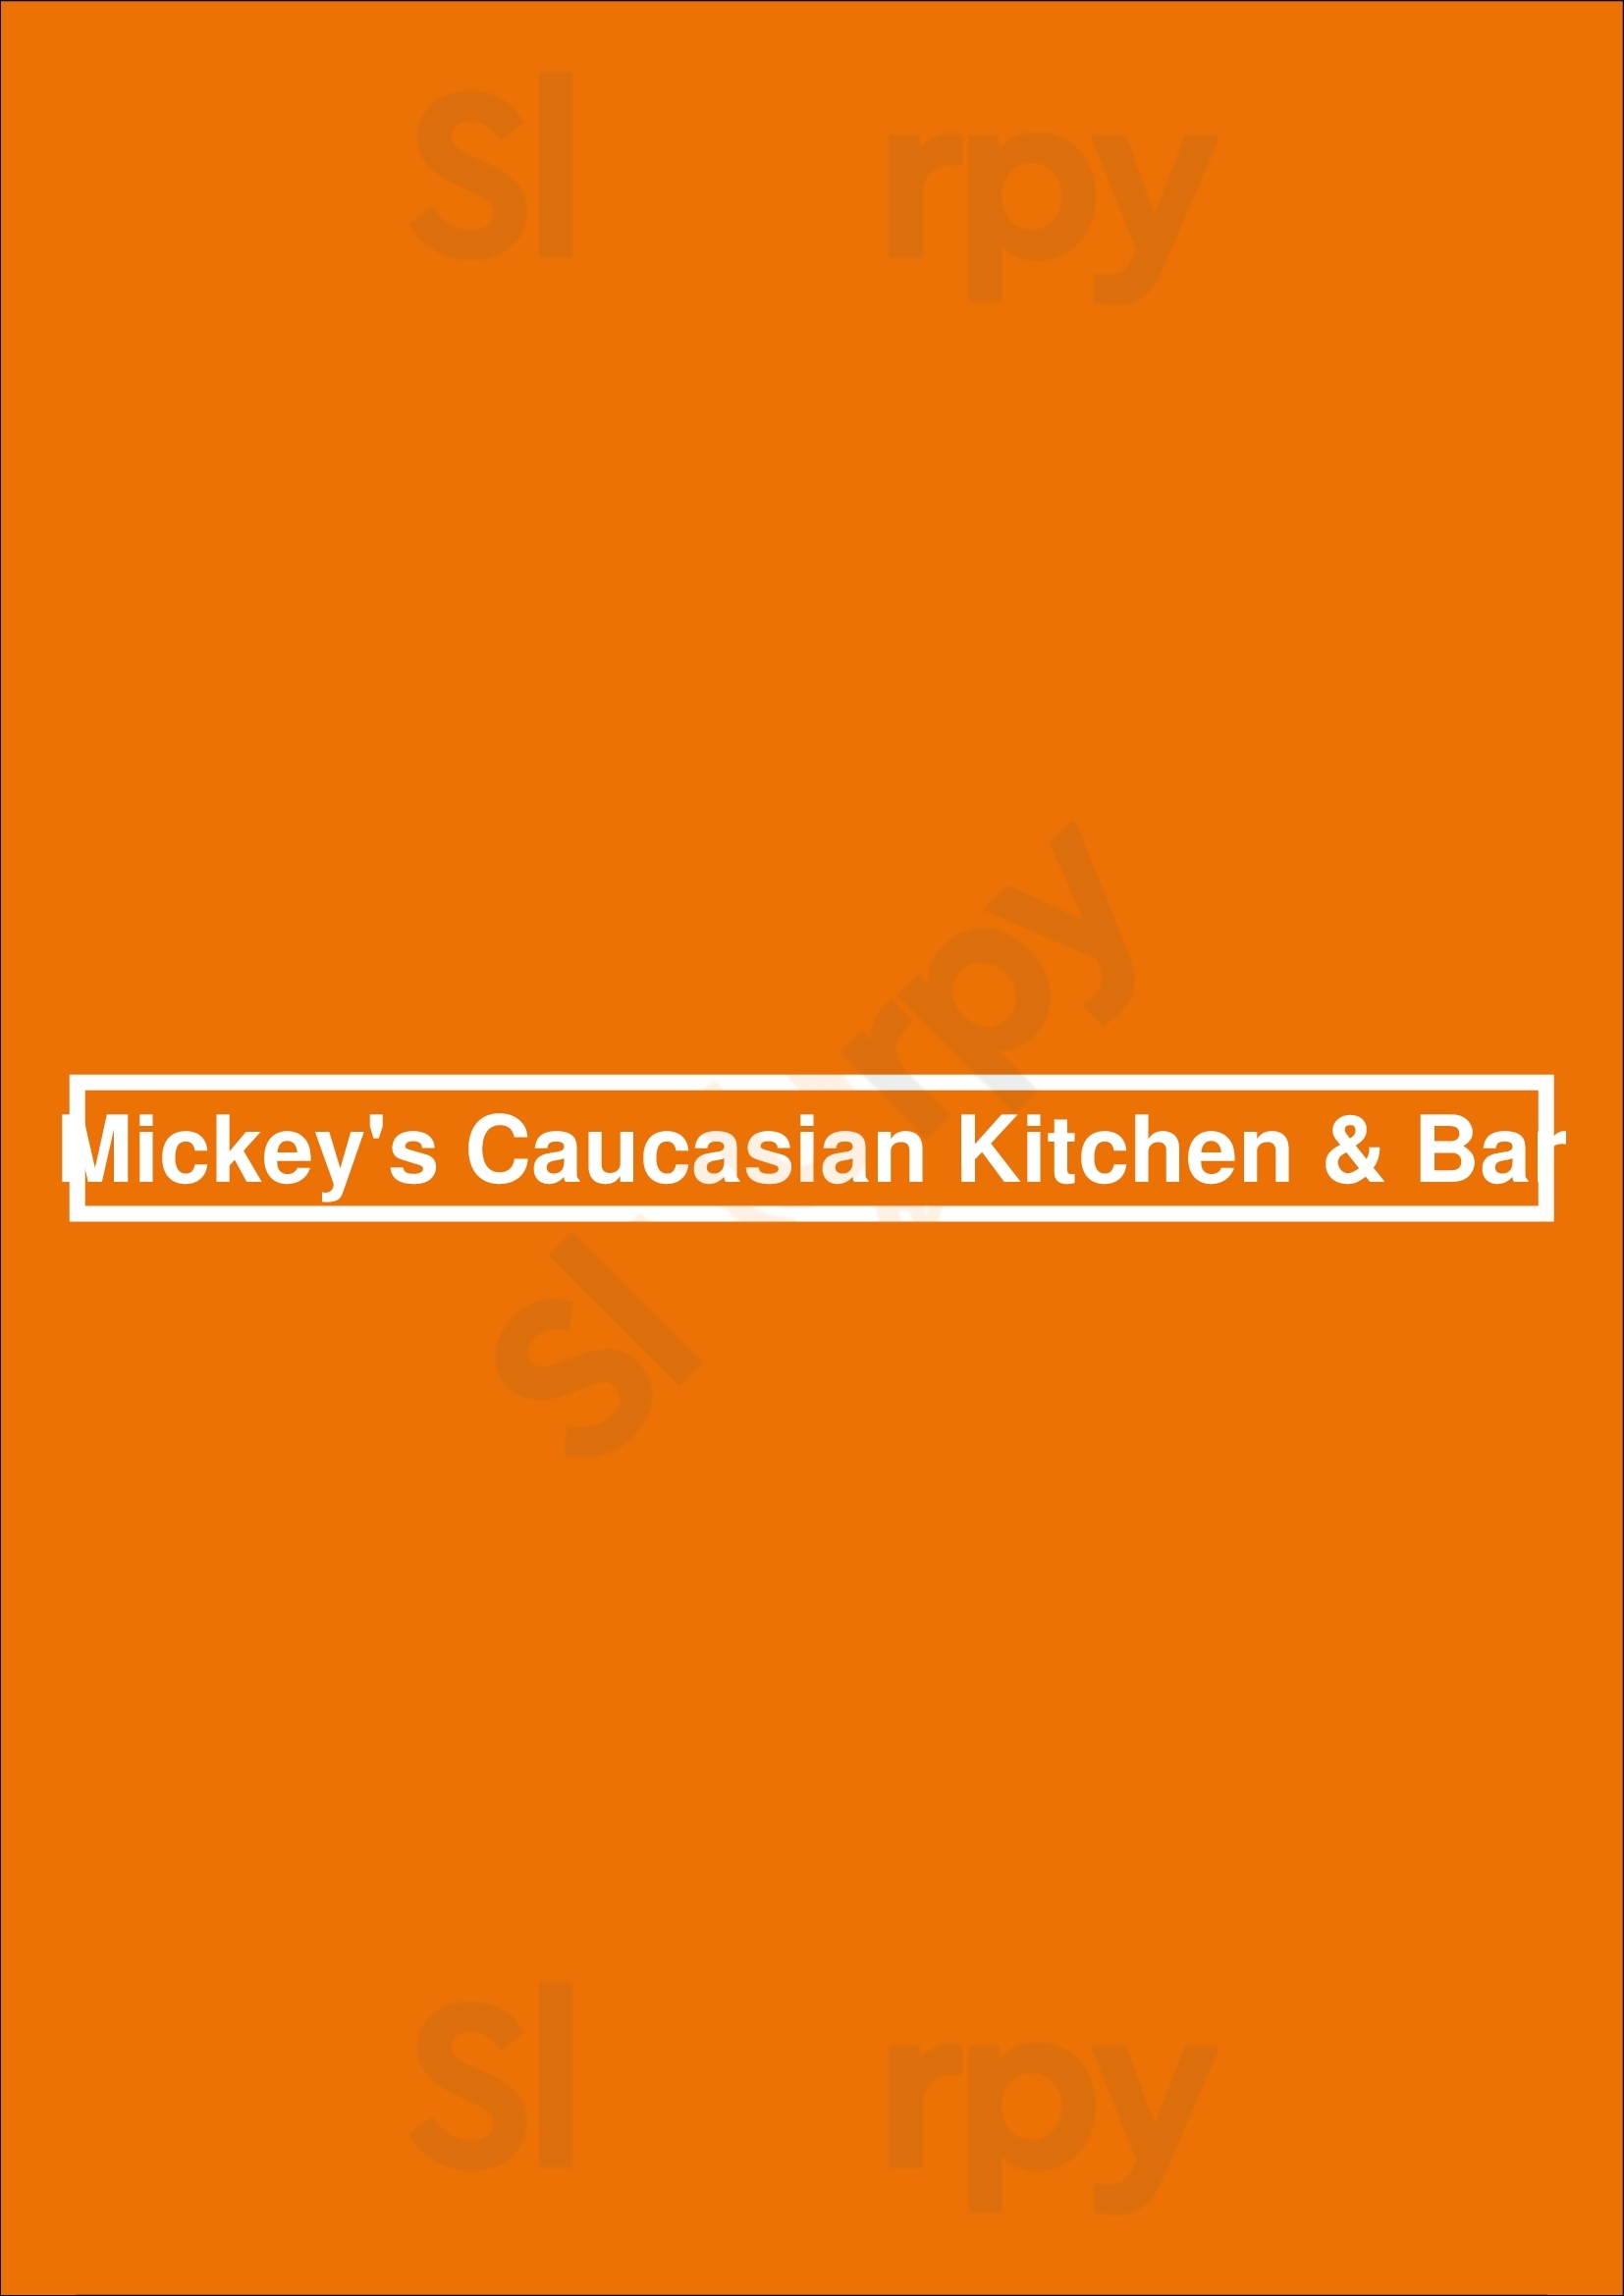 Mickey's Caucasian Kitchen & Bar Haarlem Menu - 1